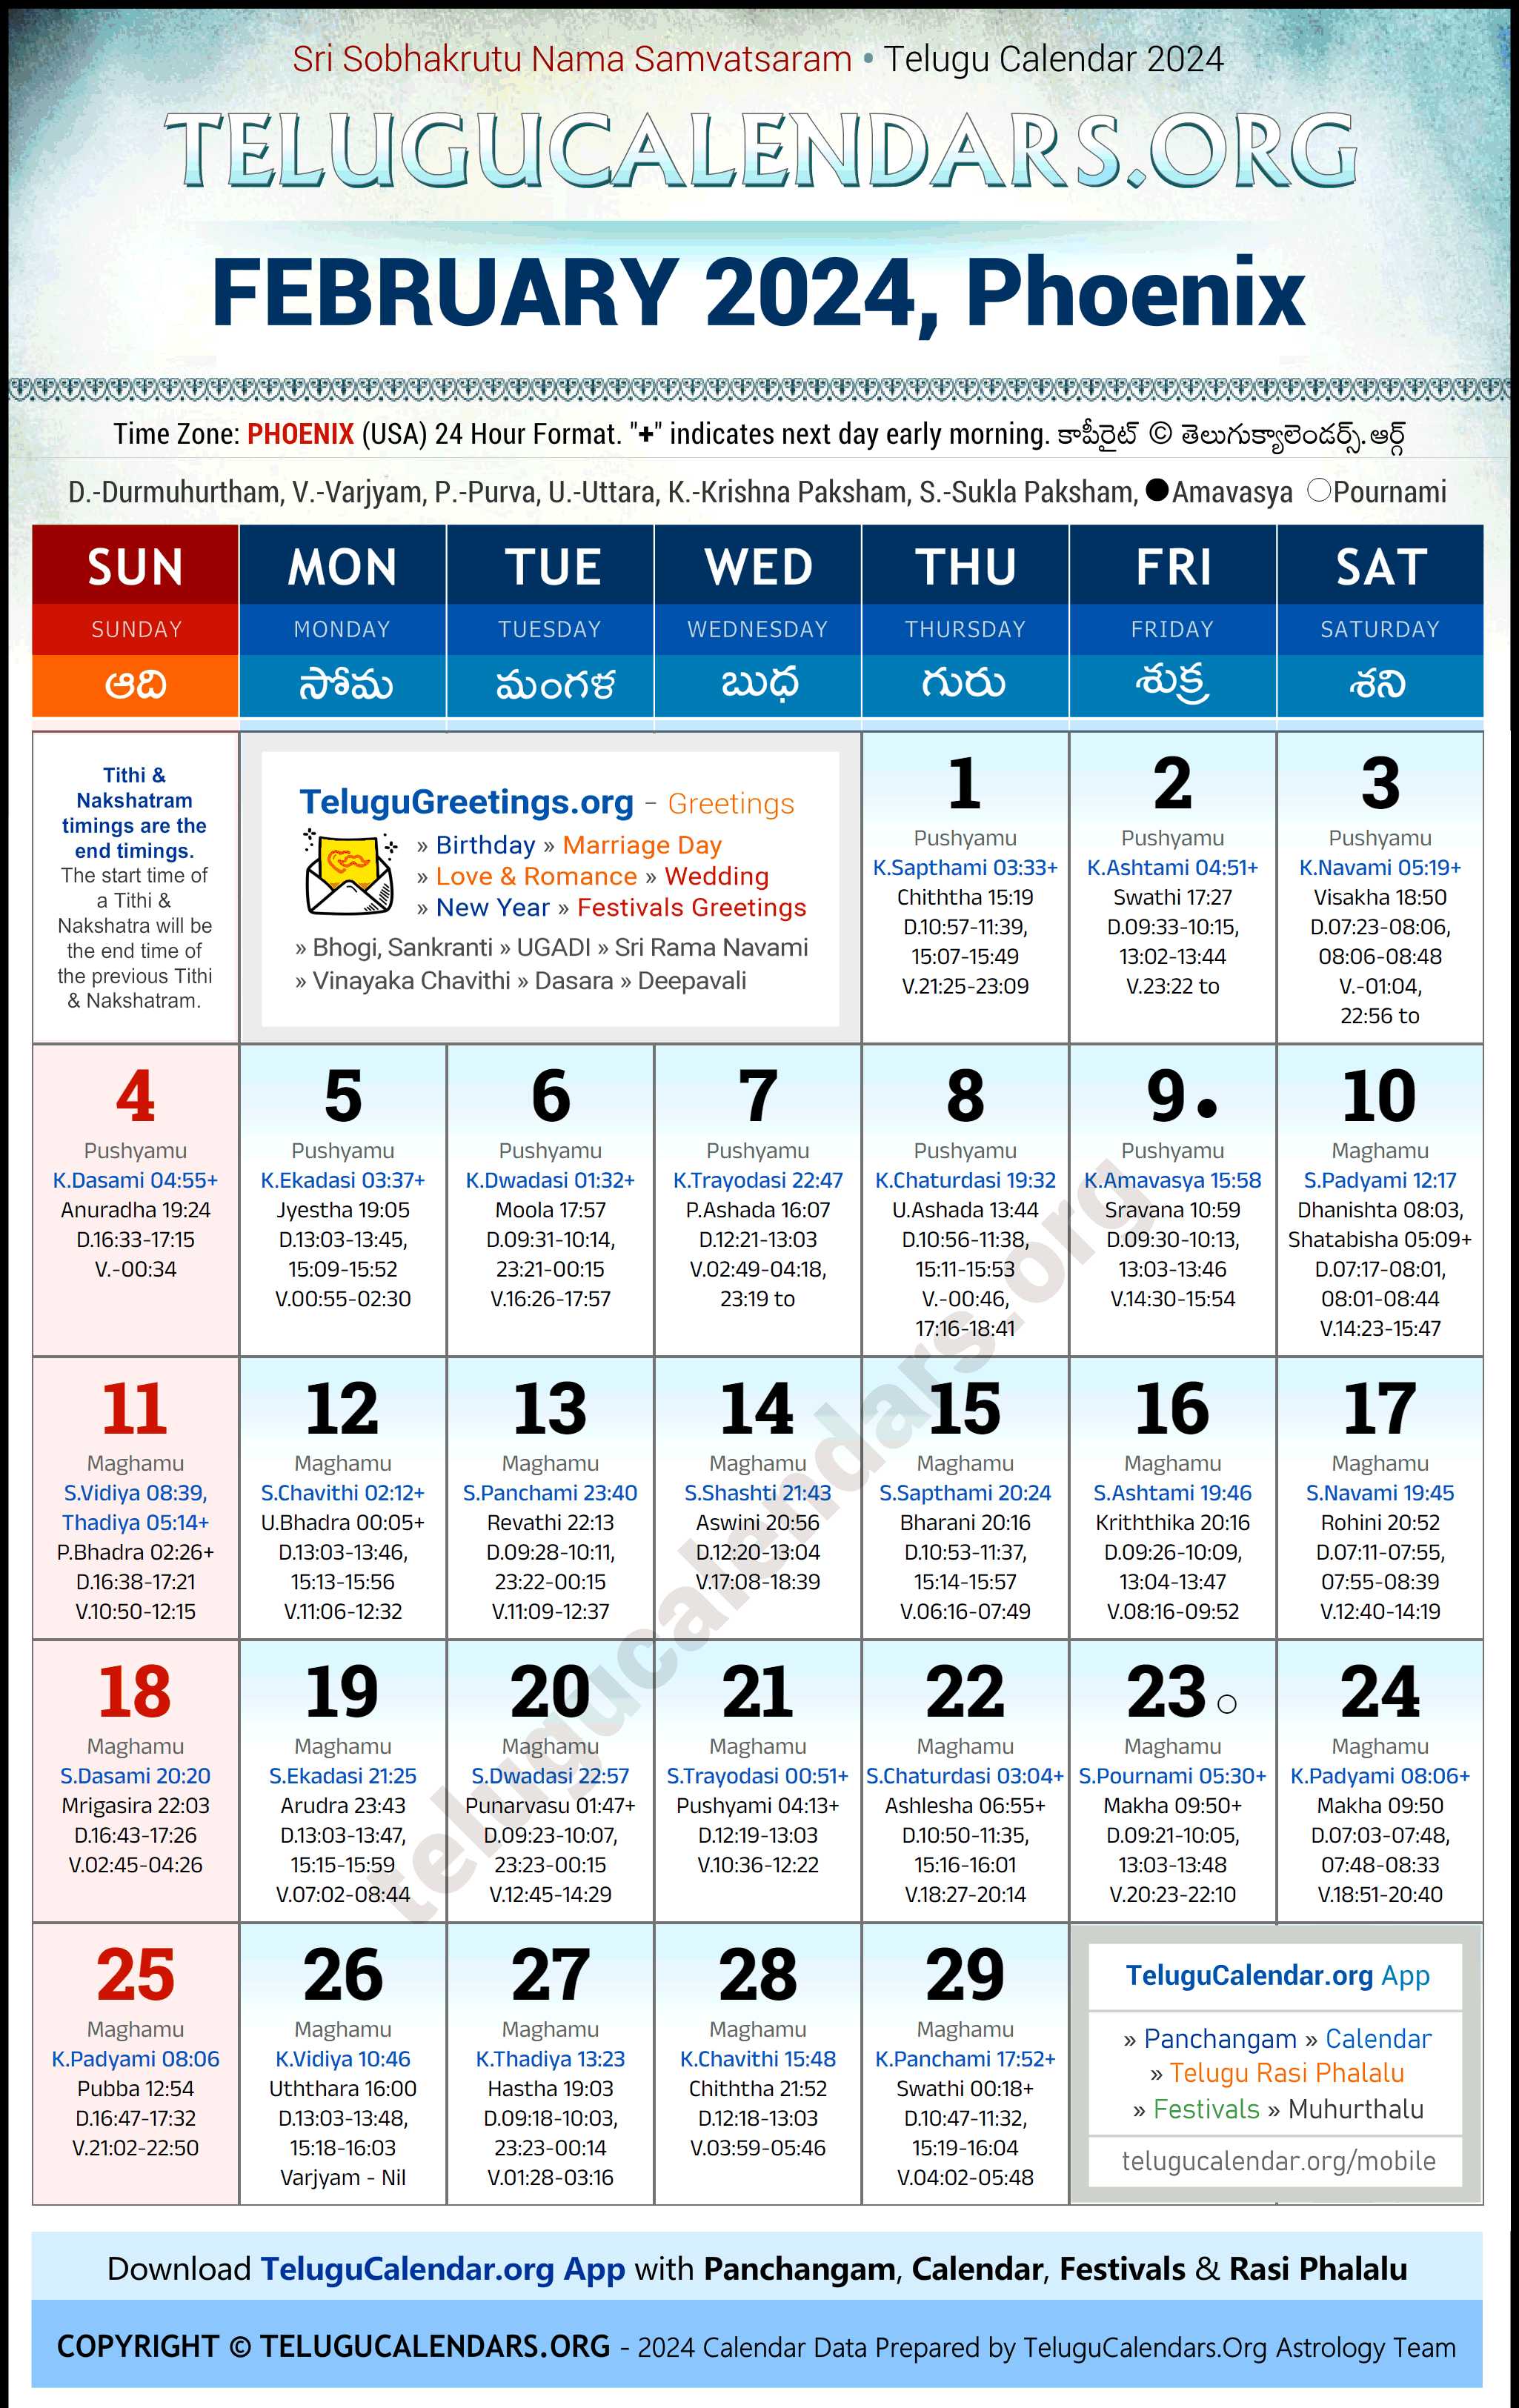 Telugu Calendar 2024 February Festivals for Phoenix